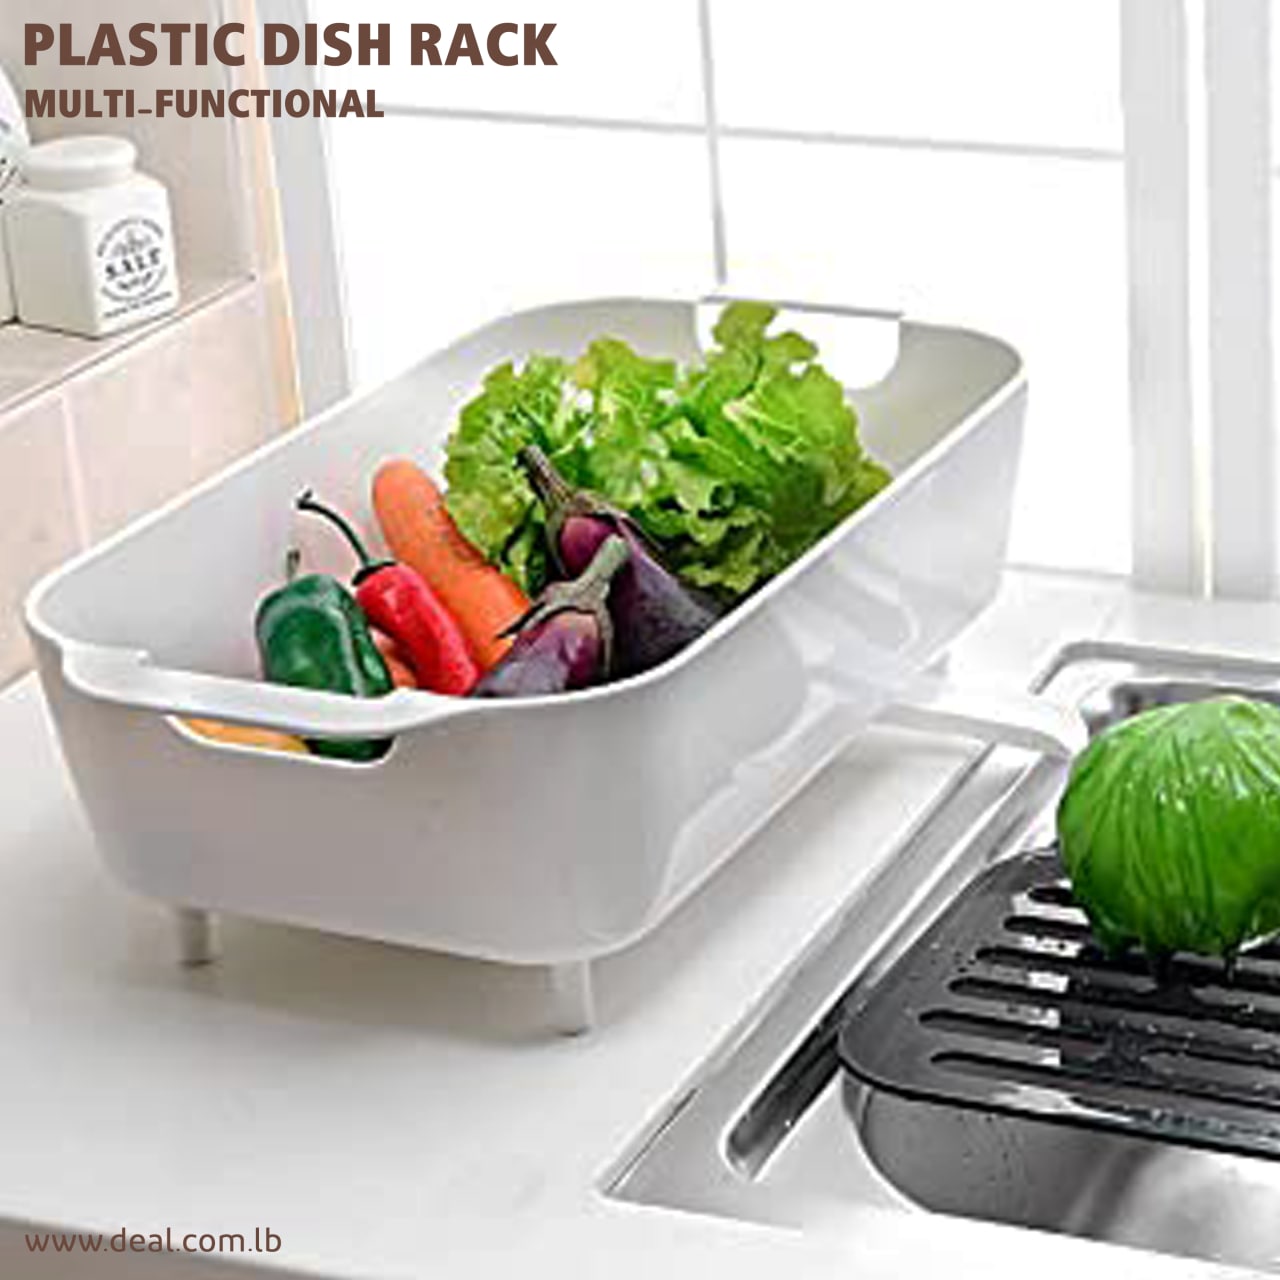 Multi-Functional Plastic Dish Rack | Thoughtful Arc Guide Design , Avoid To Splashing